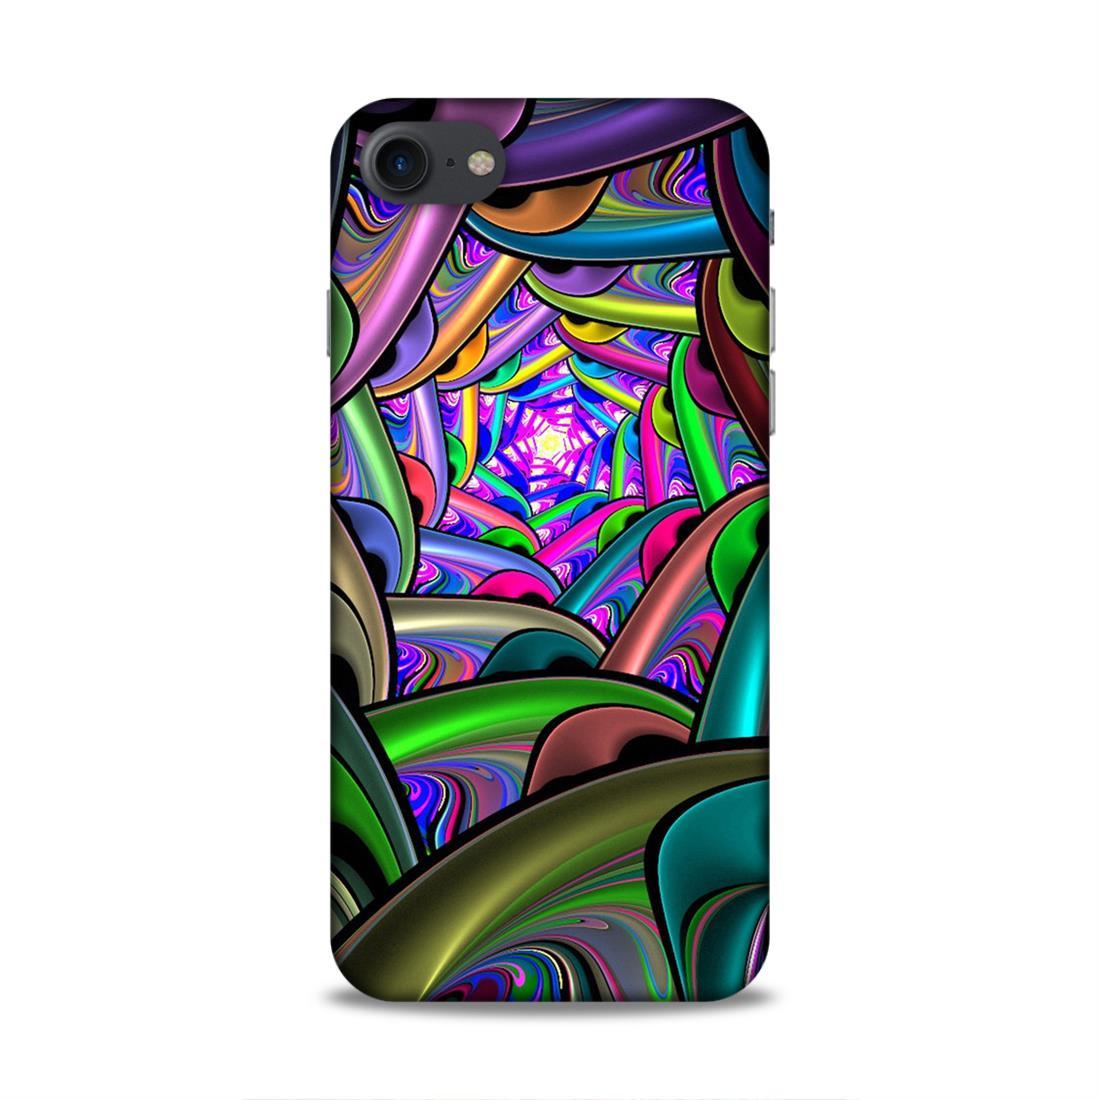 Deep Multicolour iPhone 7 Mobile Cover